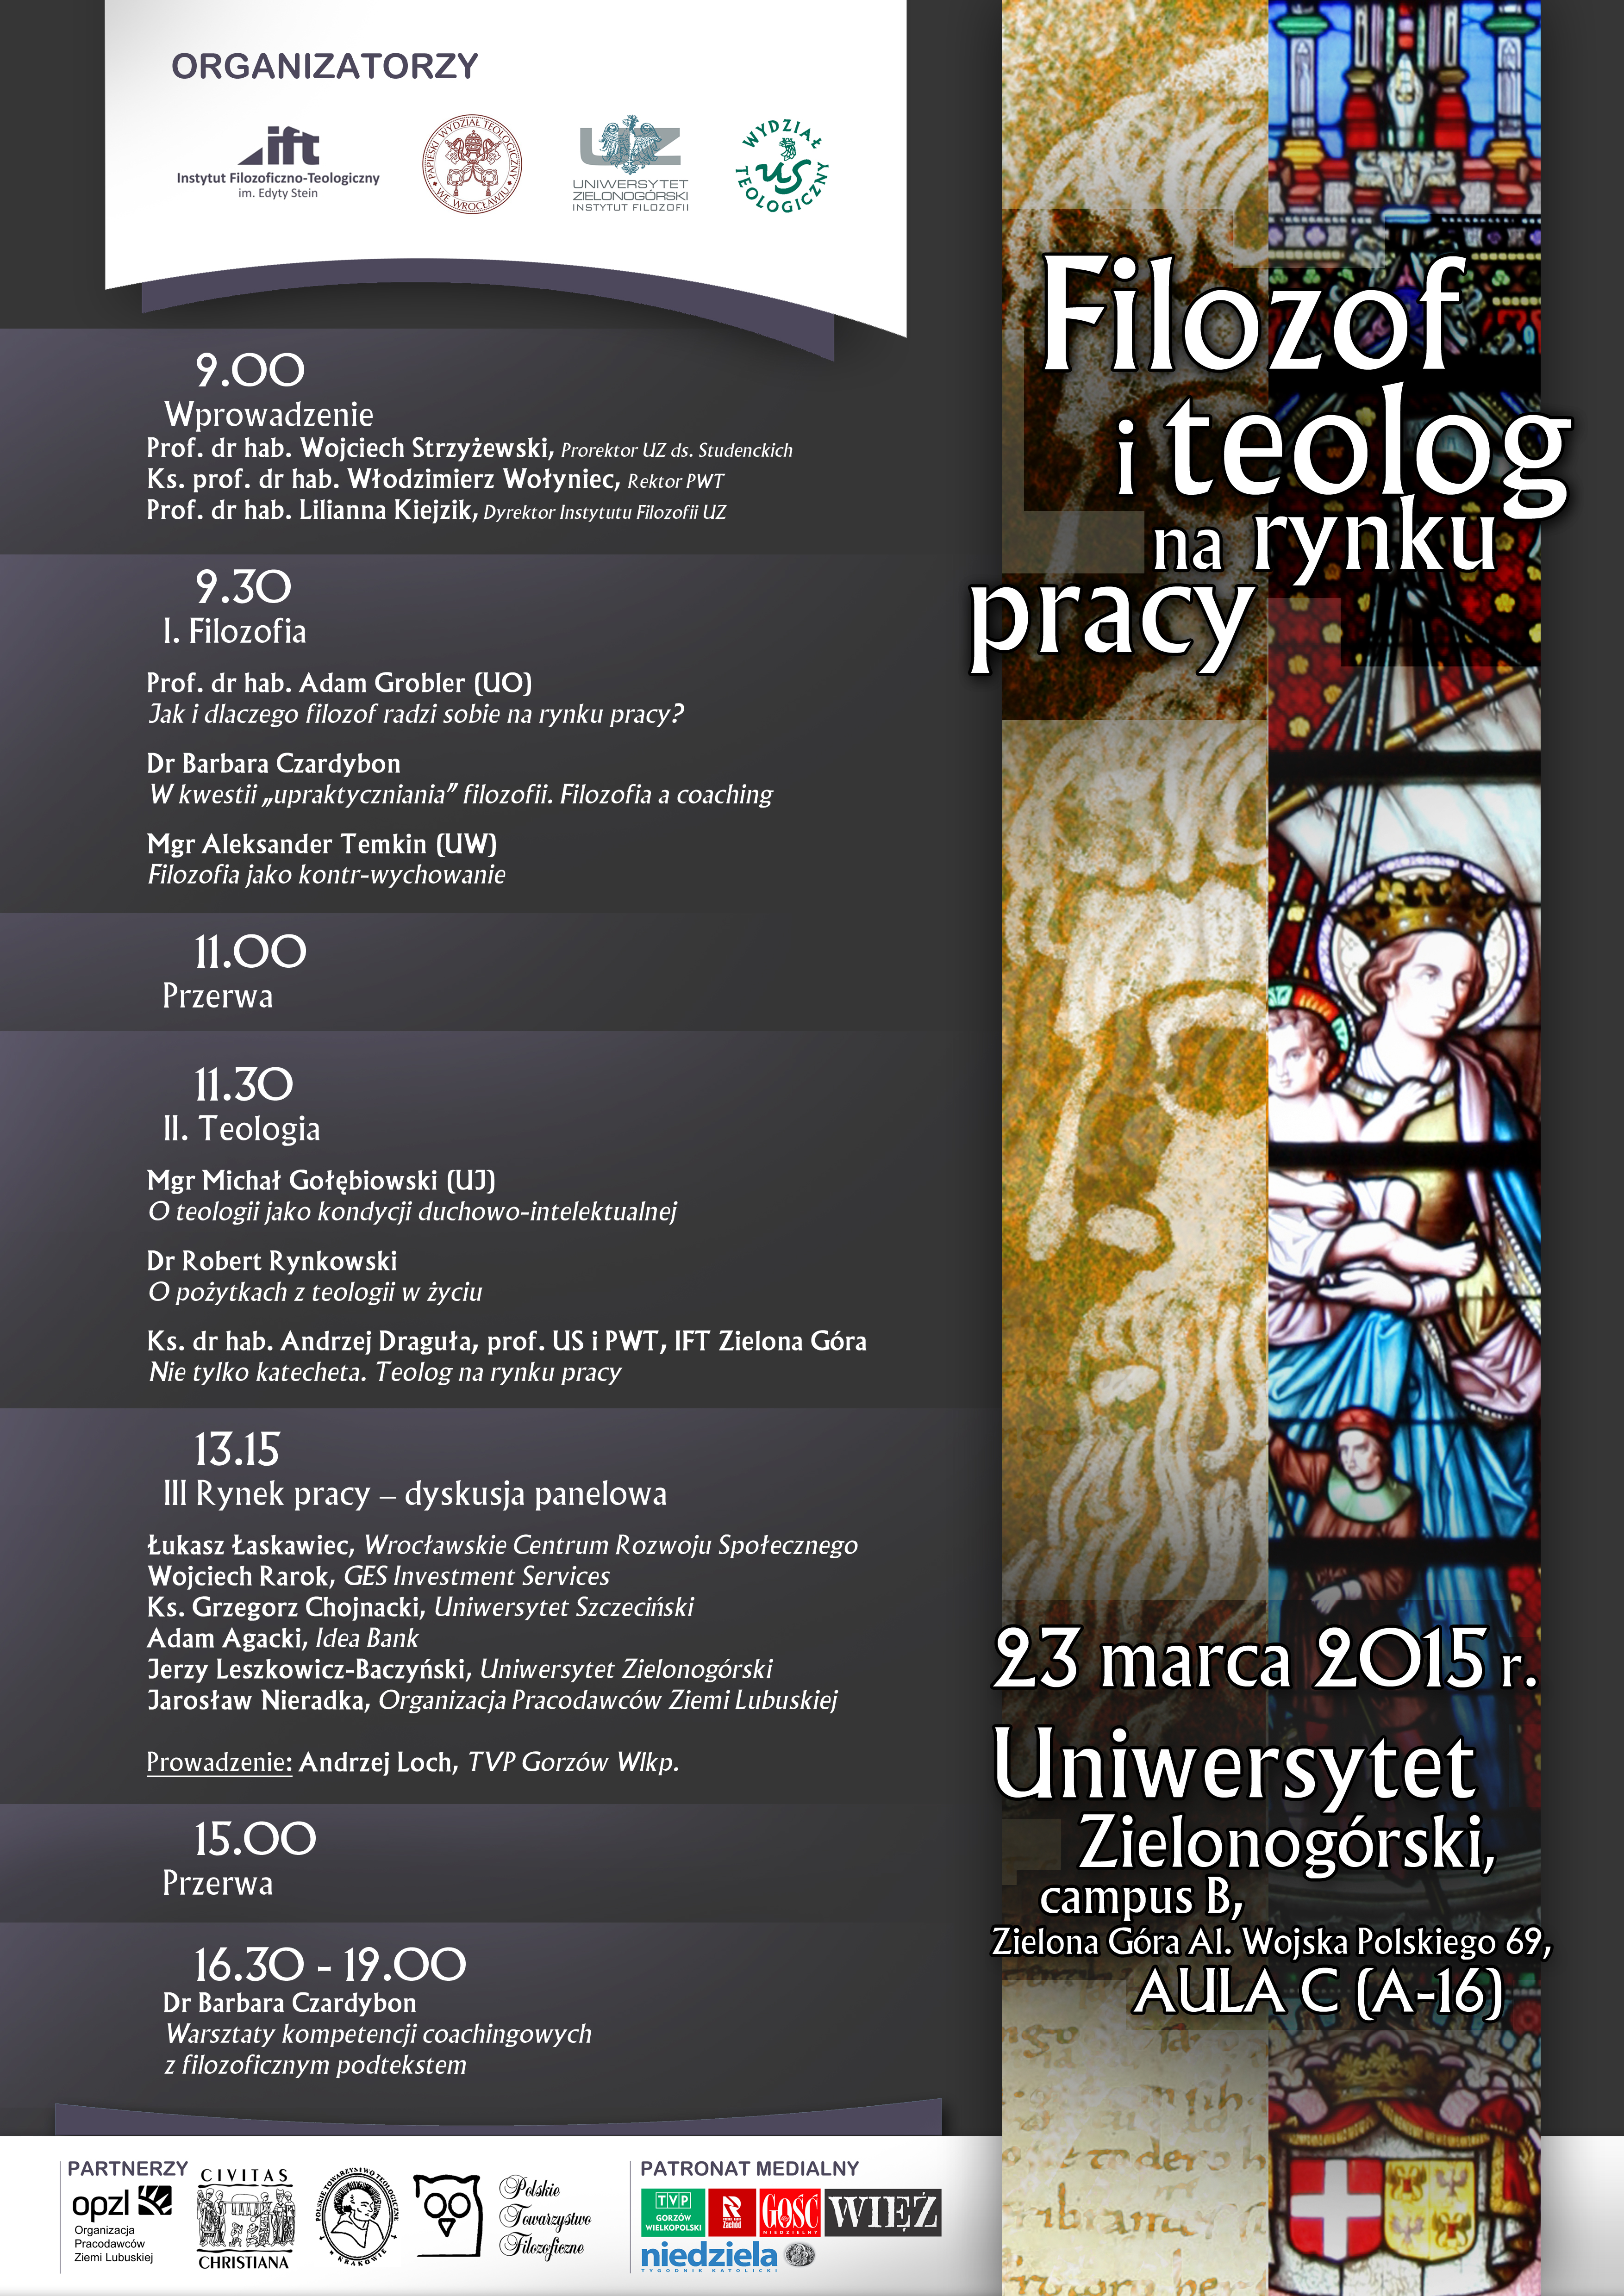 konferencja - 23.03.2015 - plakat.jpg